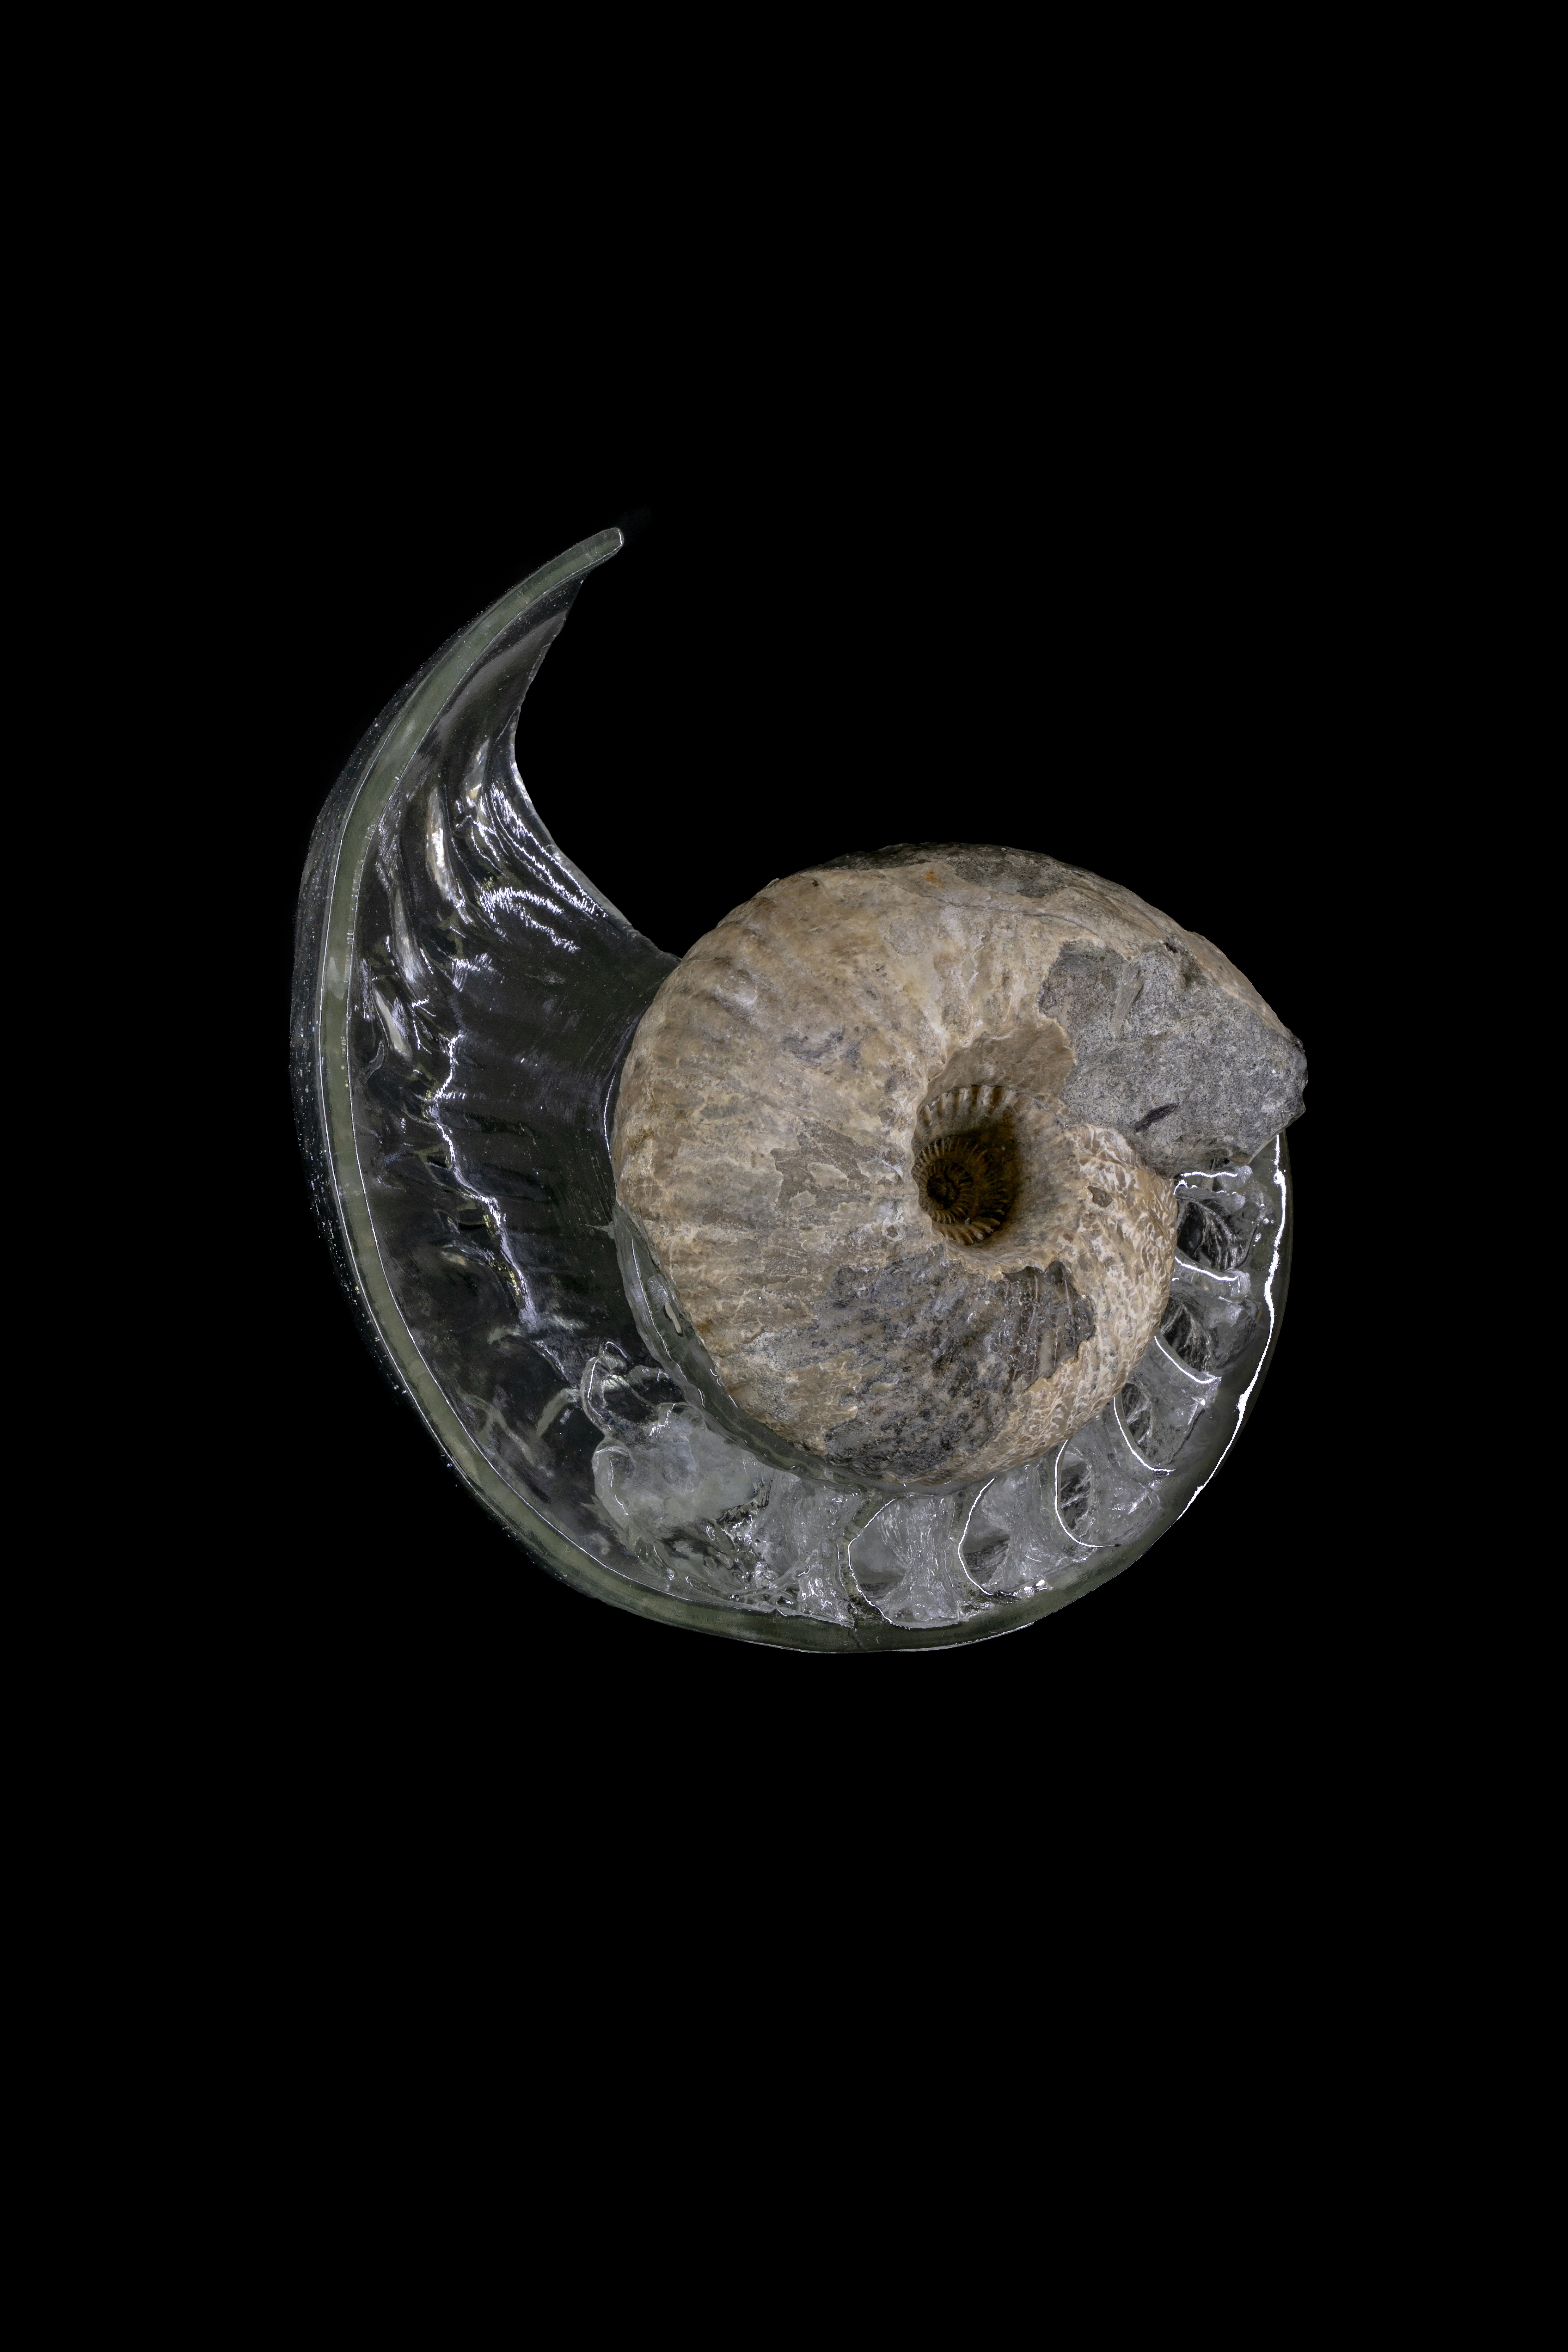 Think Evolution #1 : Kiku-ishi(Ammonite)